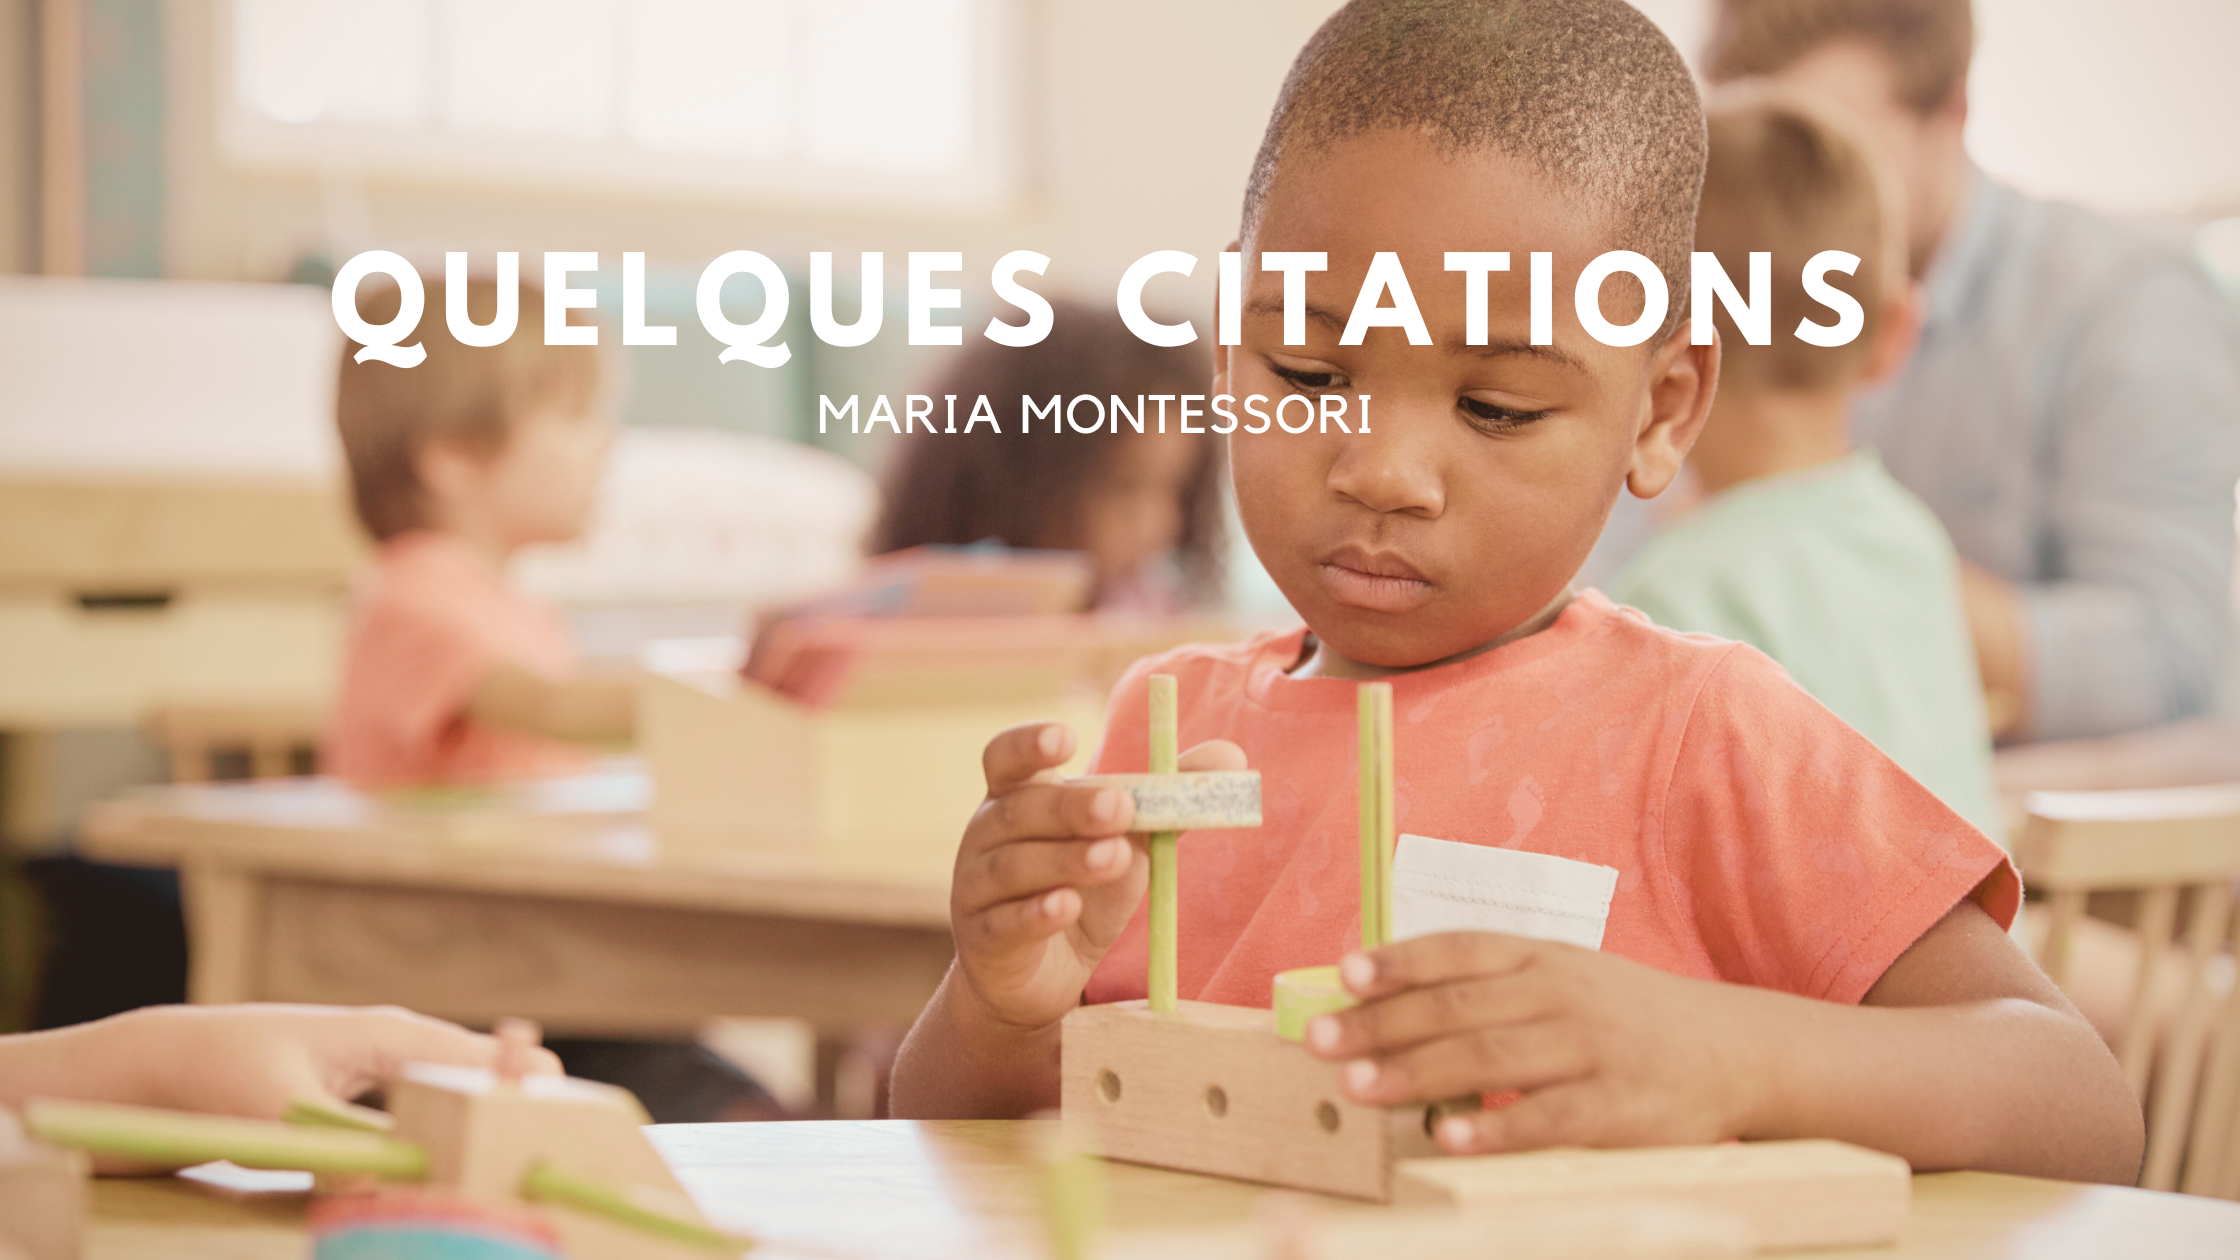 Découvrir Maria Montessori à travers ses Citations